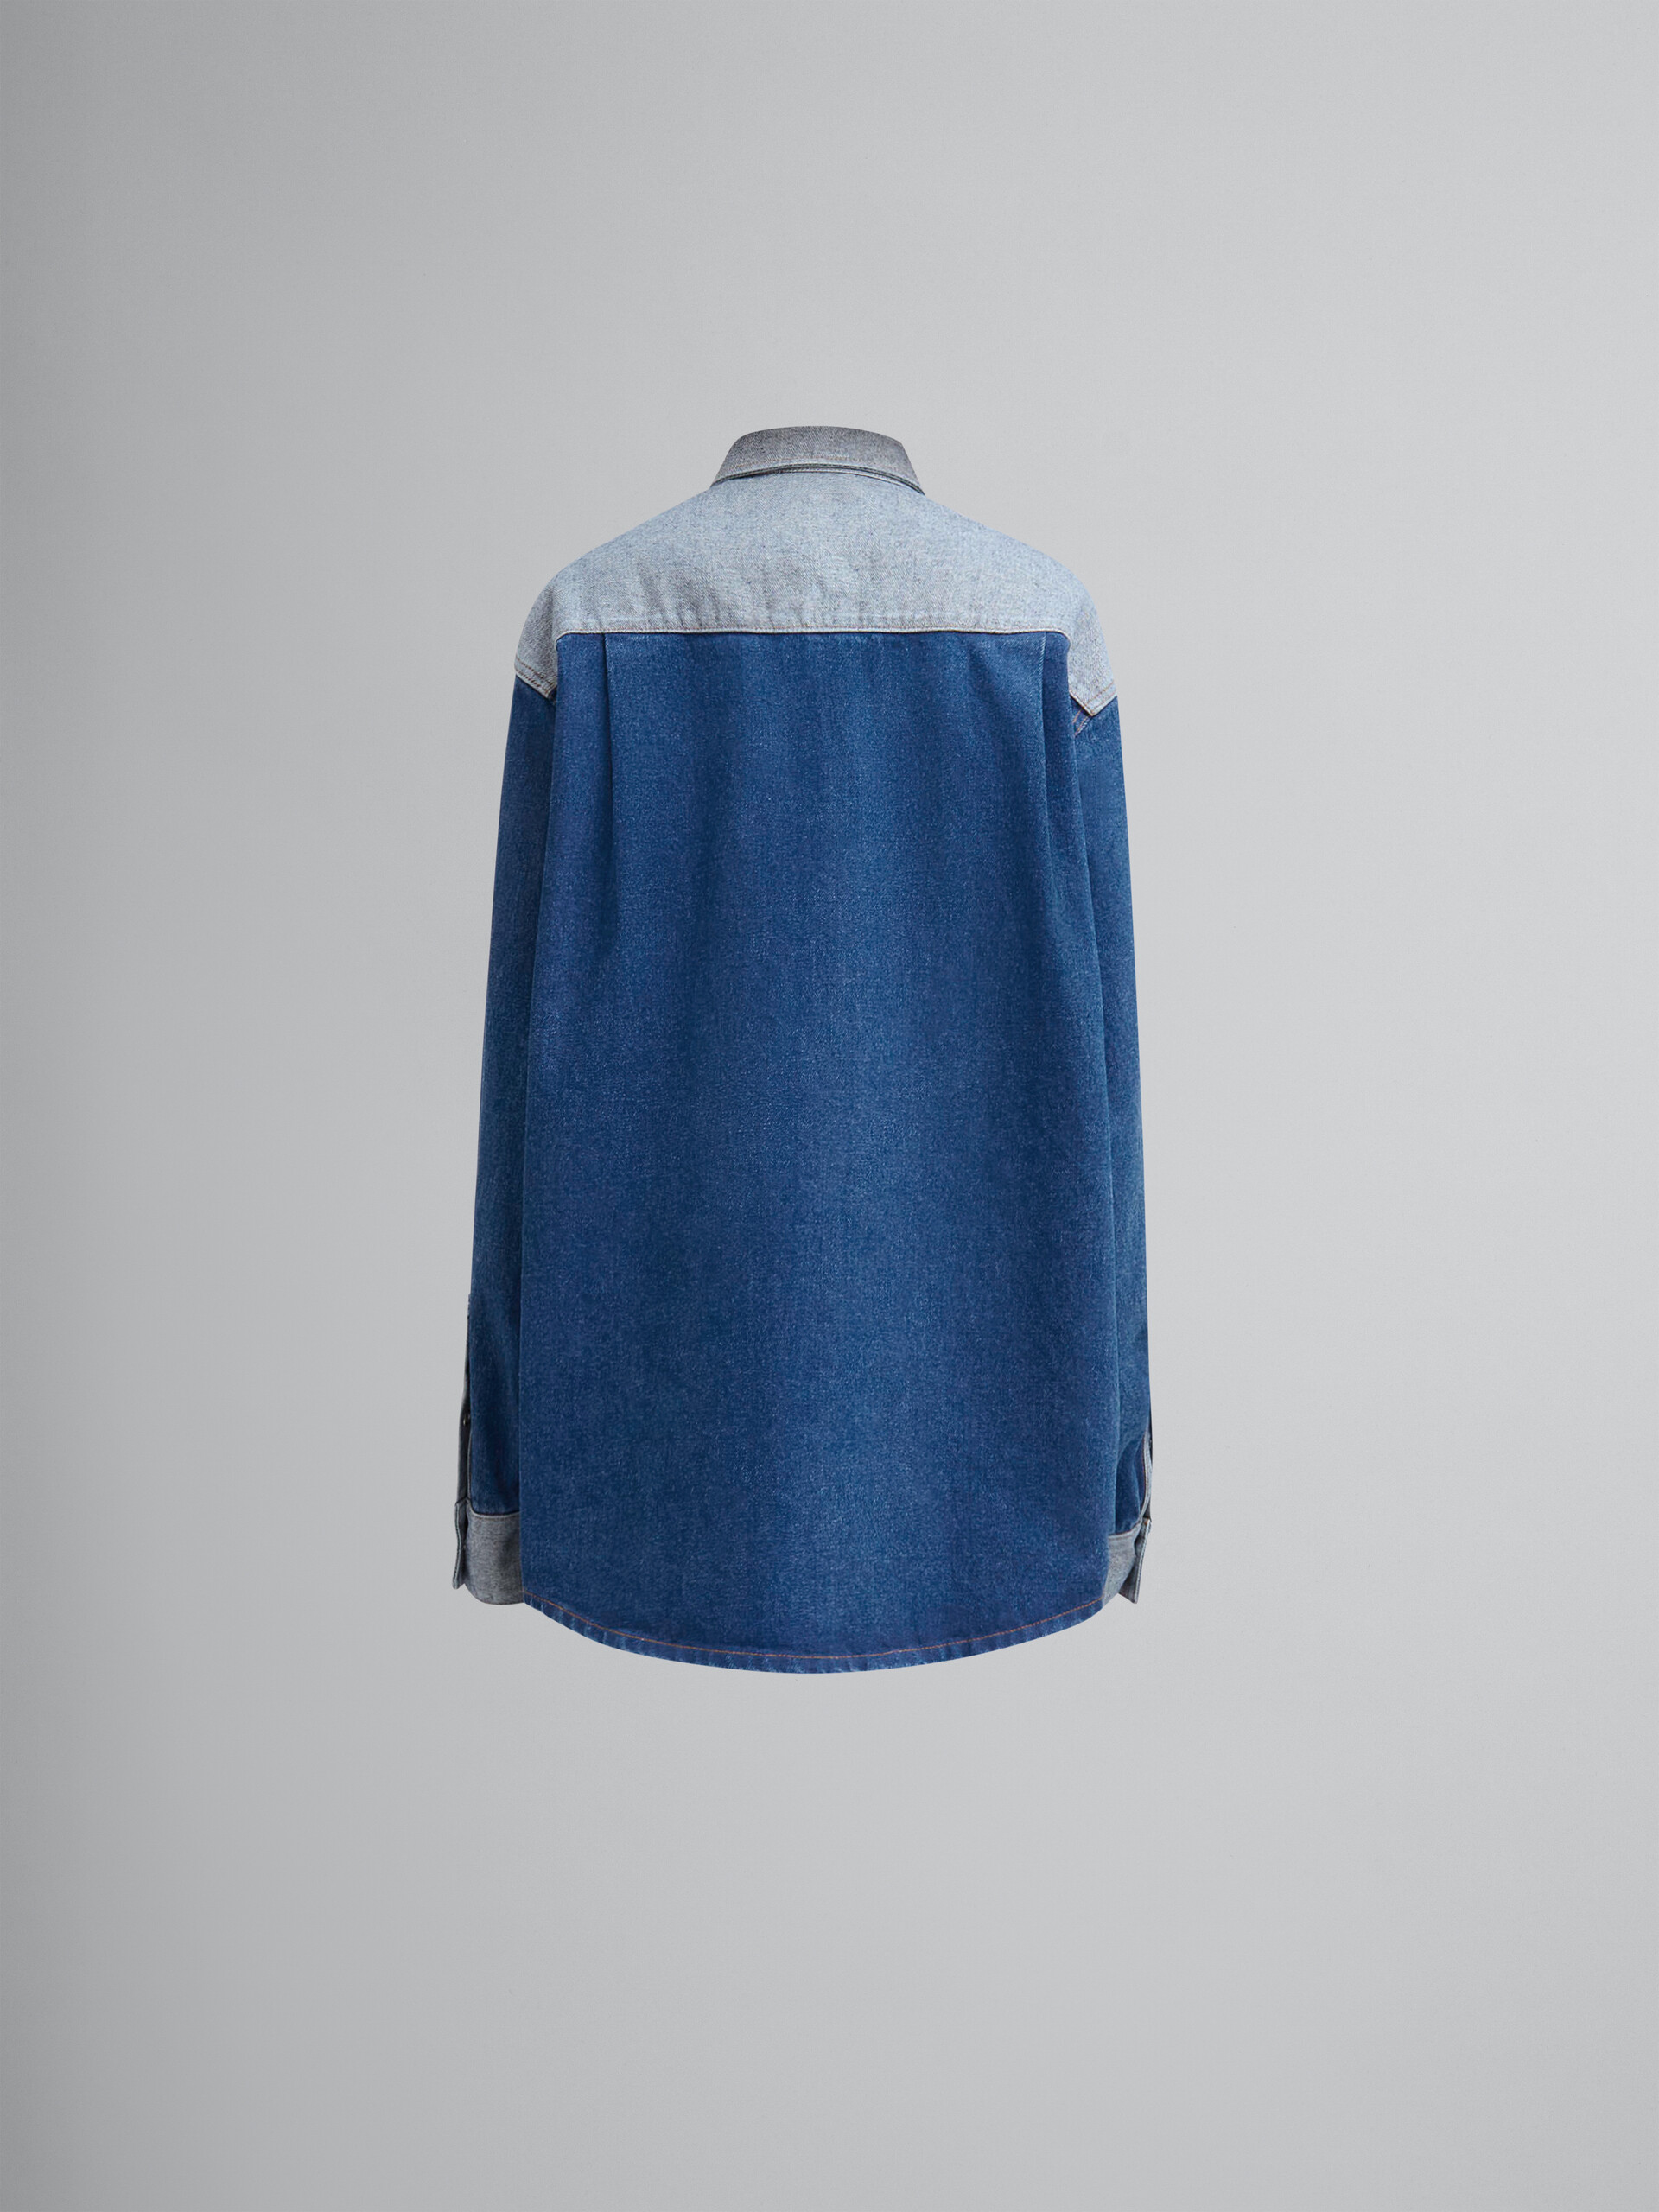 Blue two-tone denim shirt with raw-cut edges - Shirts - Image 2